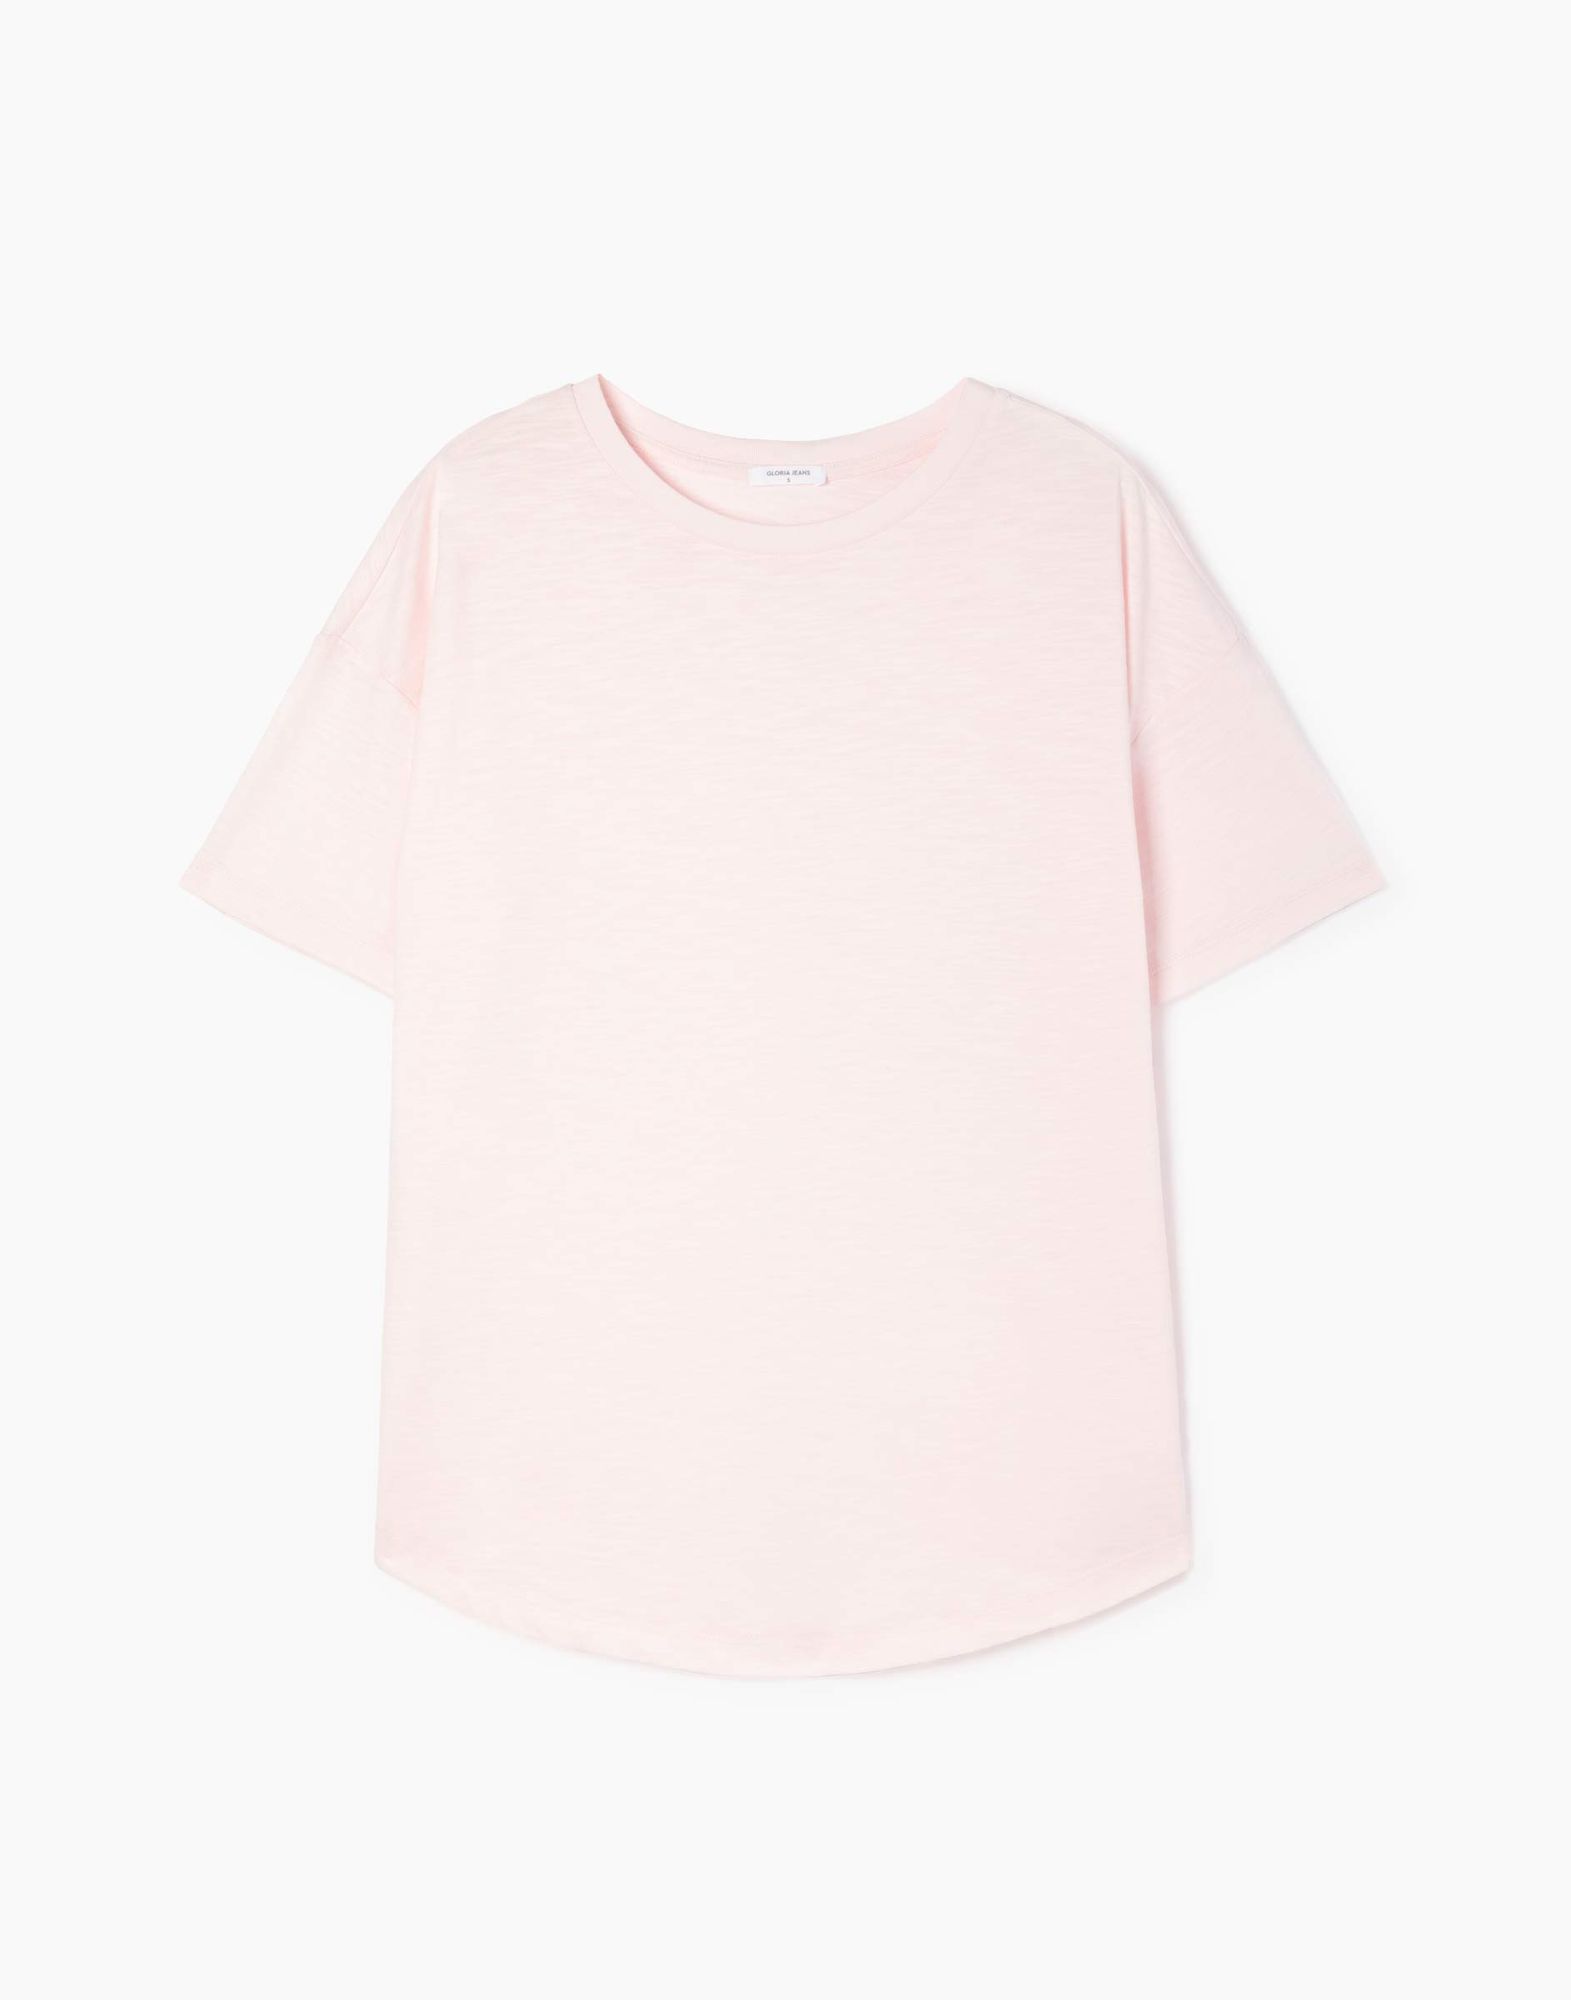 Cветло-розовая базовая футболка Loose straight из джерси-4